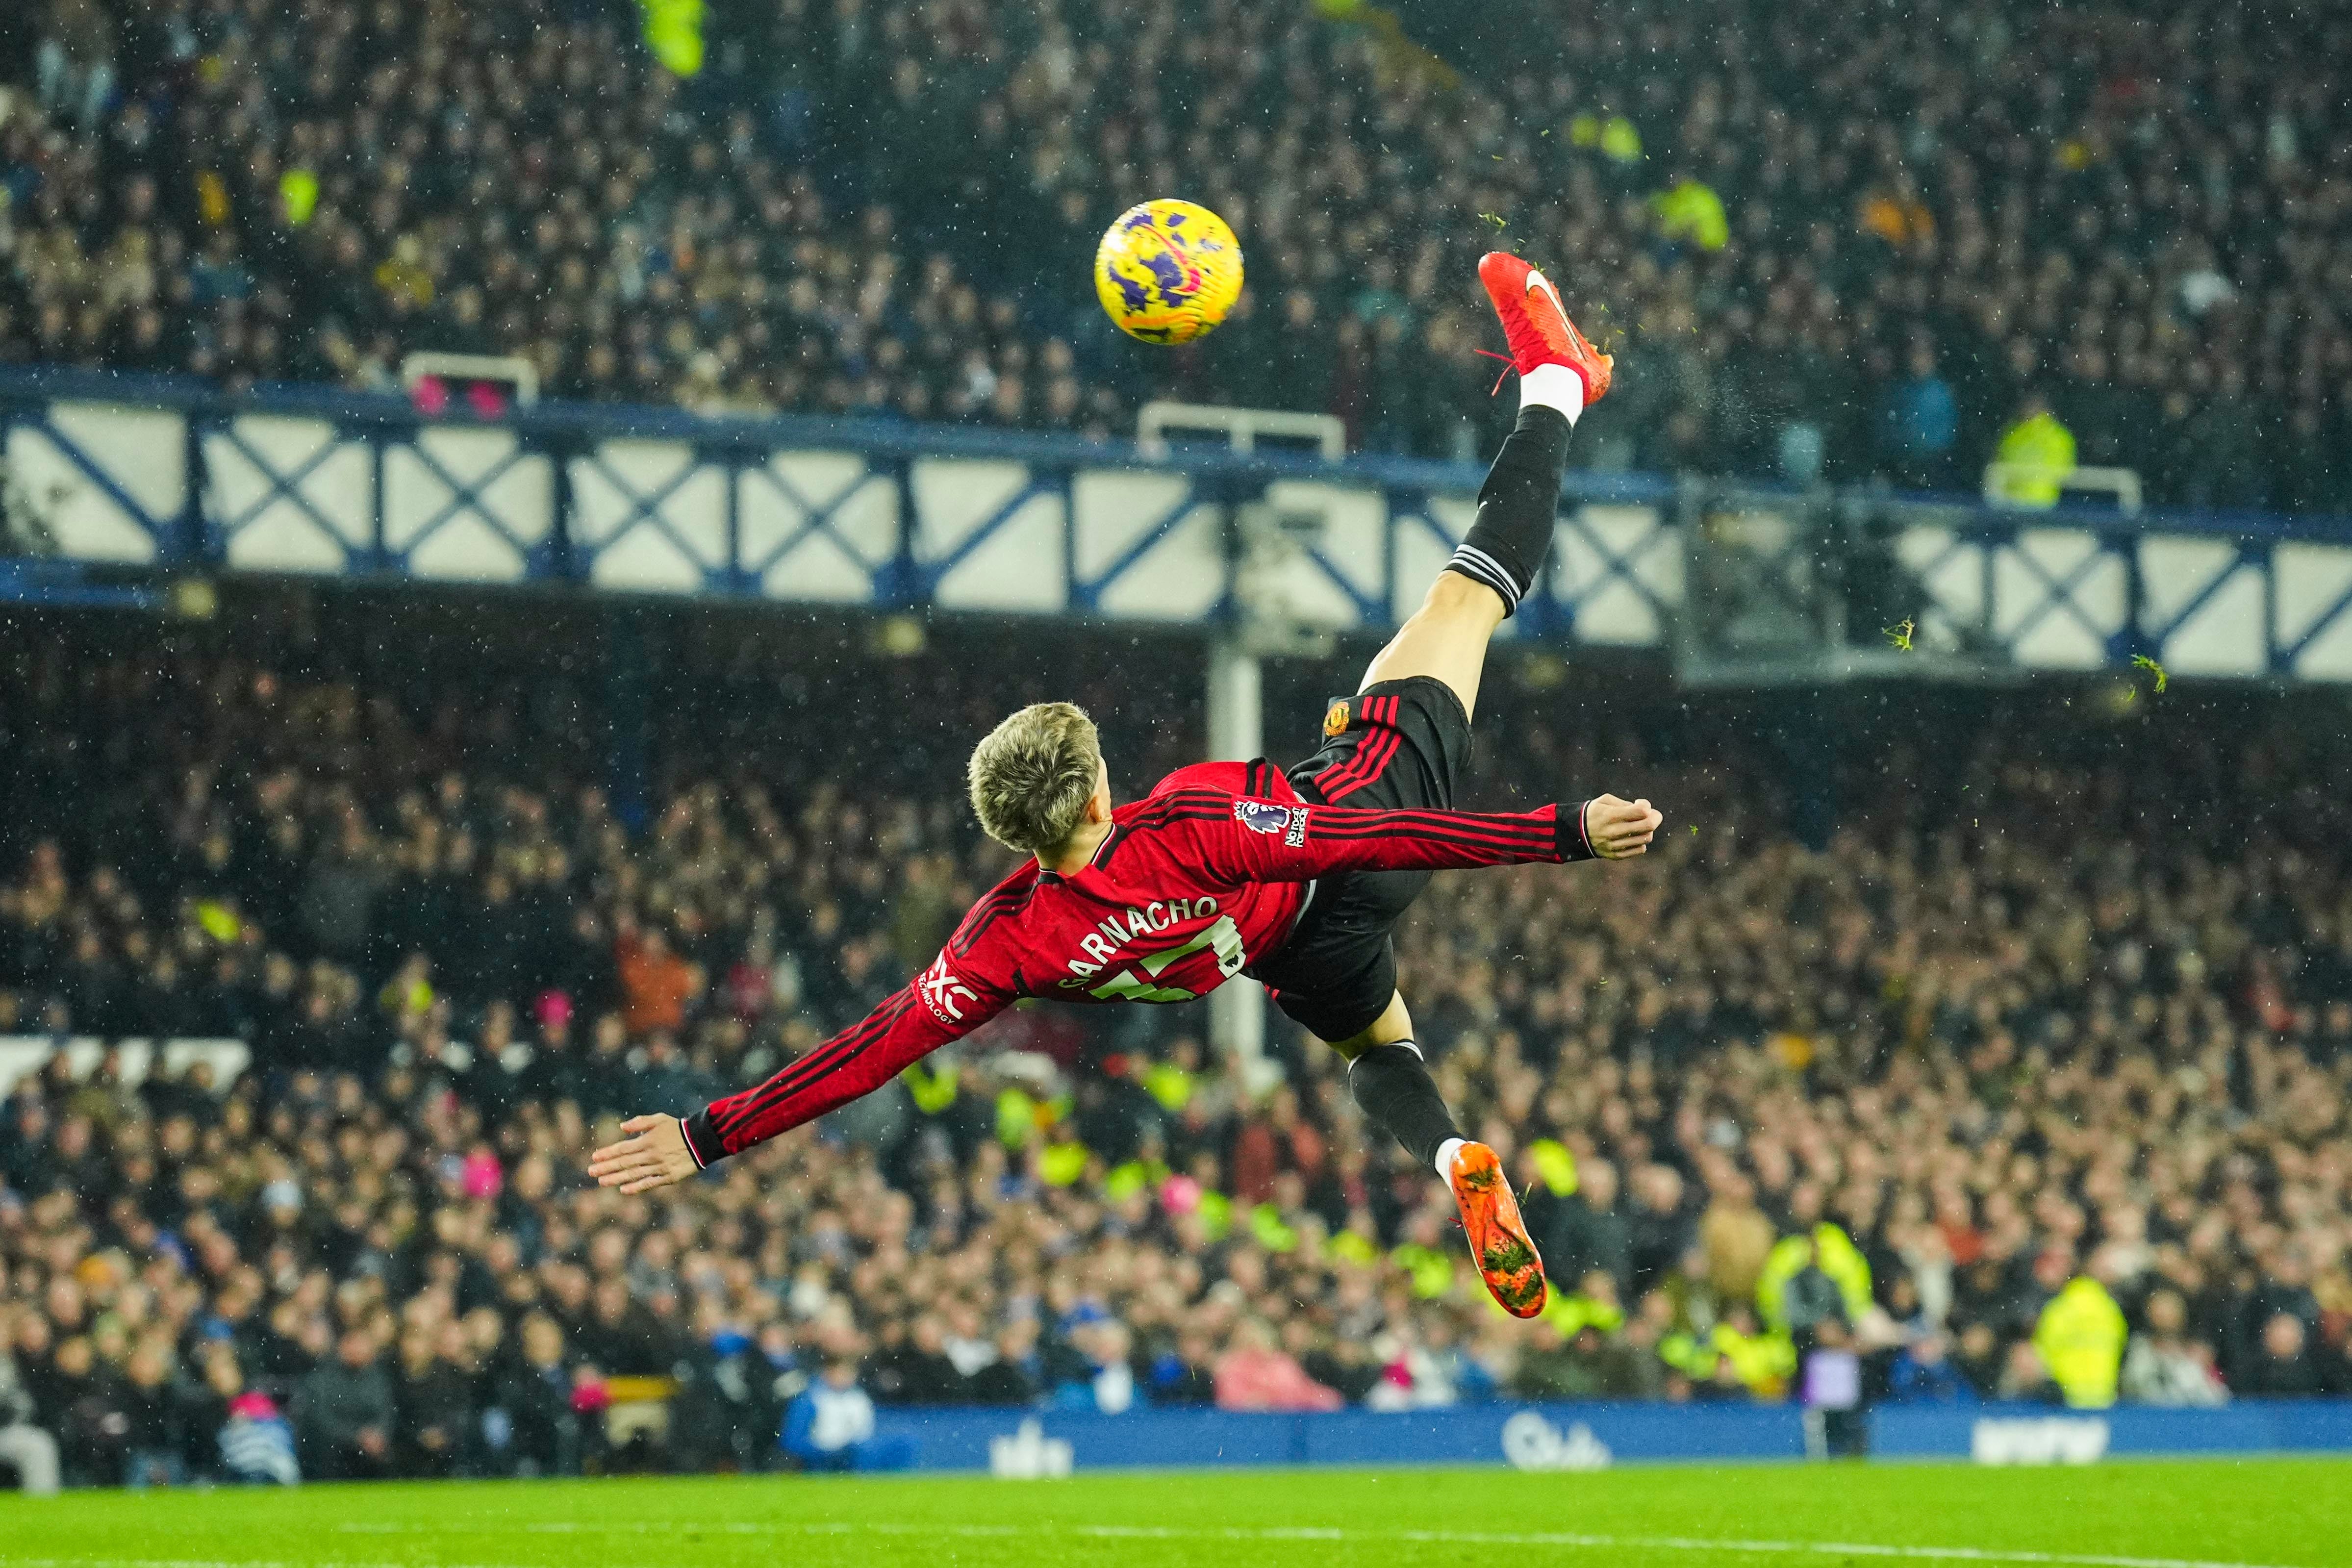 Manchester United’s Alejandro Garnacho scores a stunning overhead kick against Everton